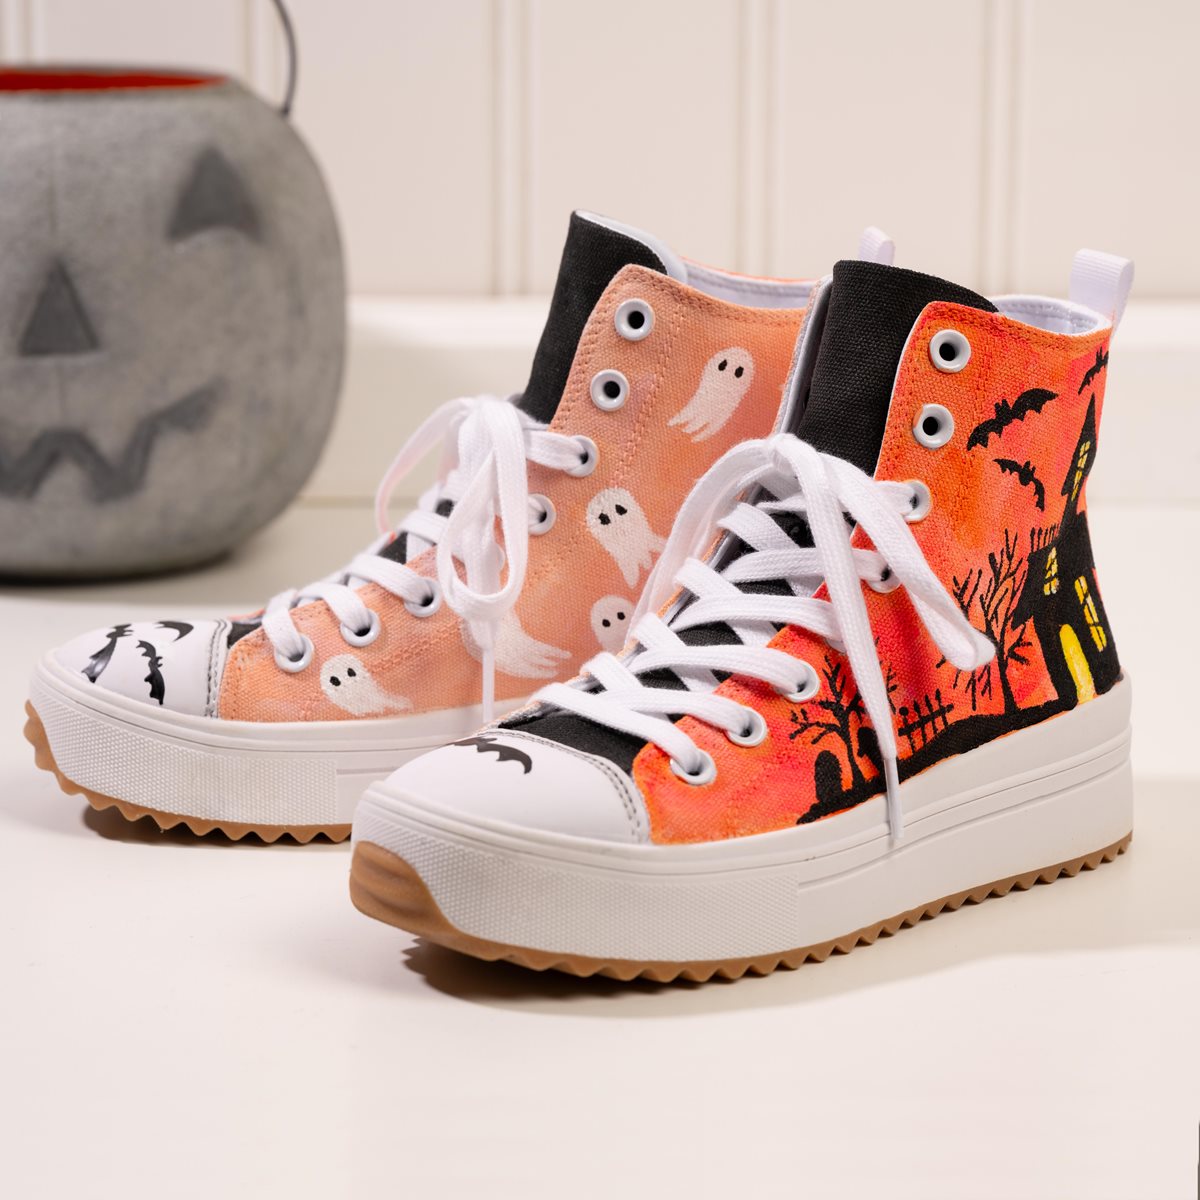 Halloween shoes